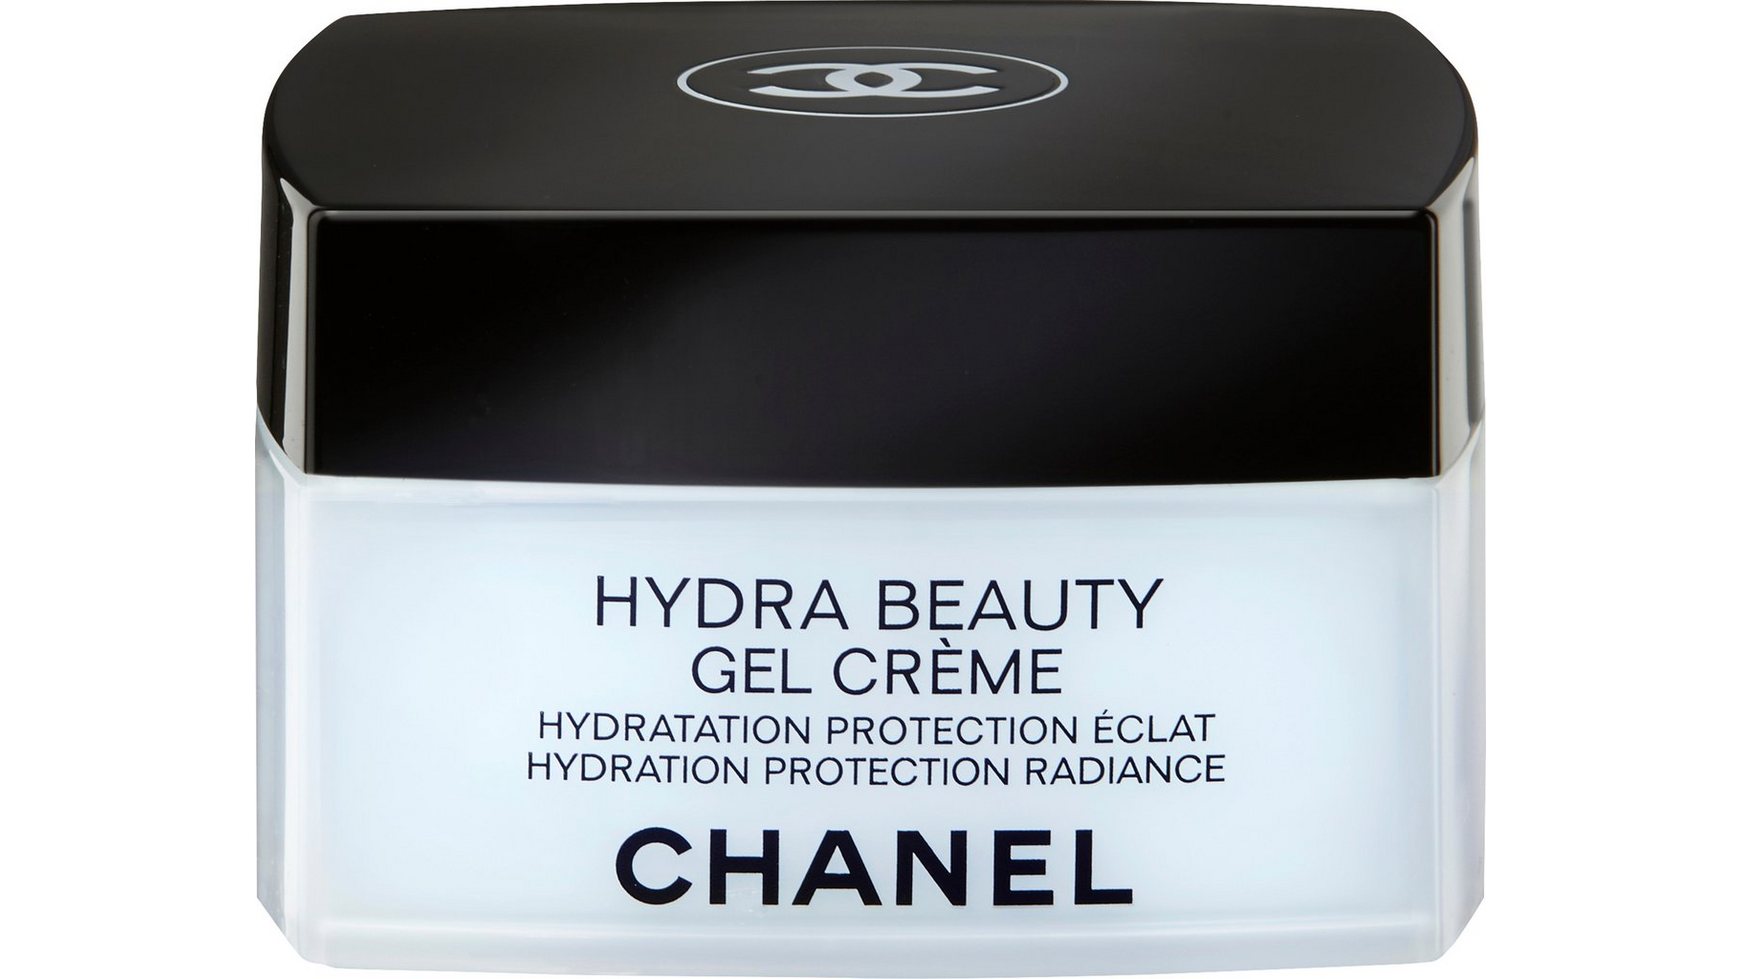 Chanel gel creme hydra beauty цена chanel hydra beauty creme hydration protection